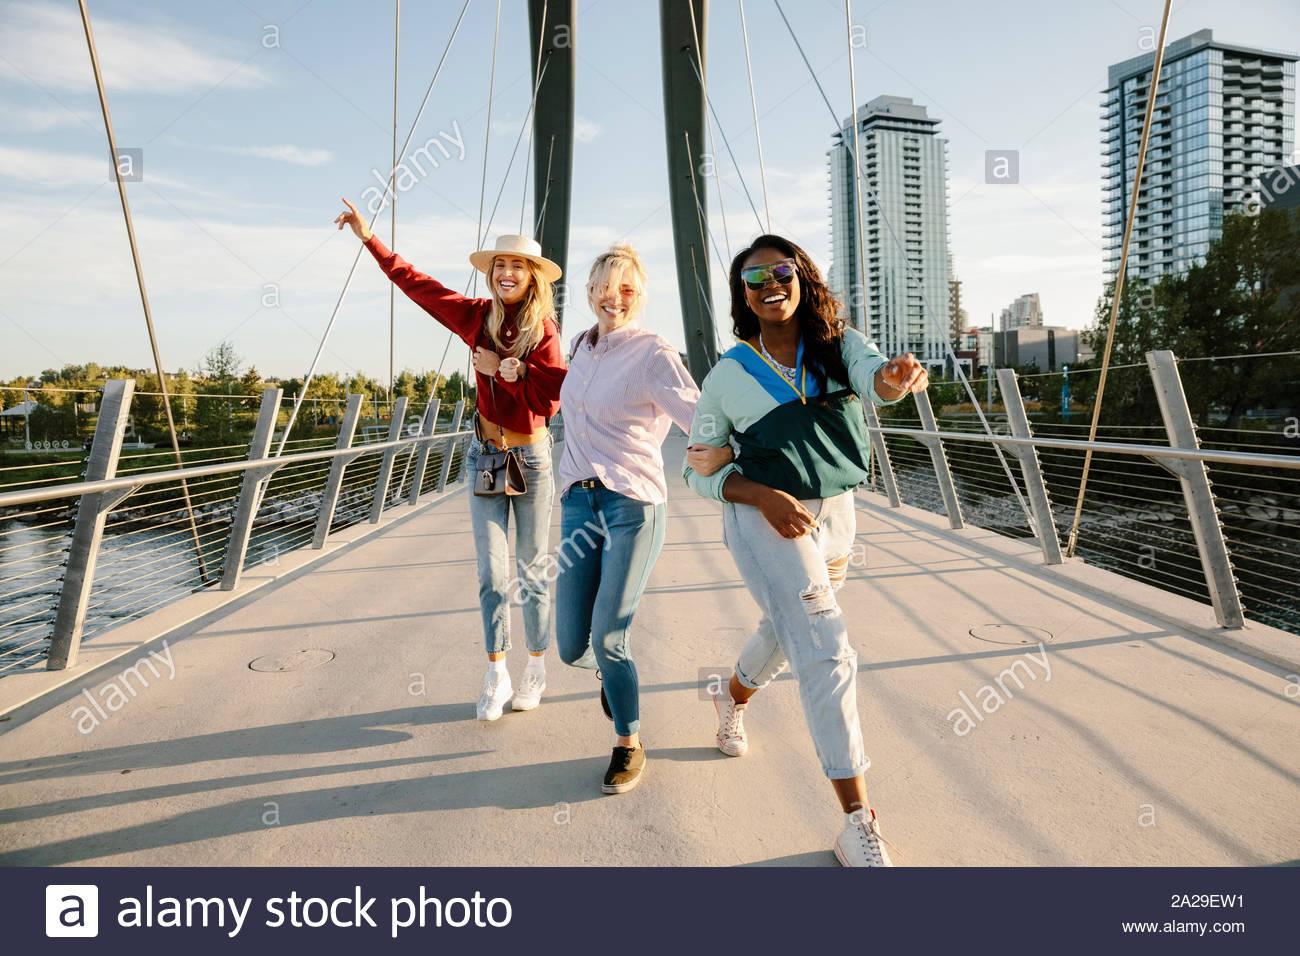 Portrait playful, carefree young women friends on sunny, urban bridge Stock Photo